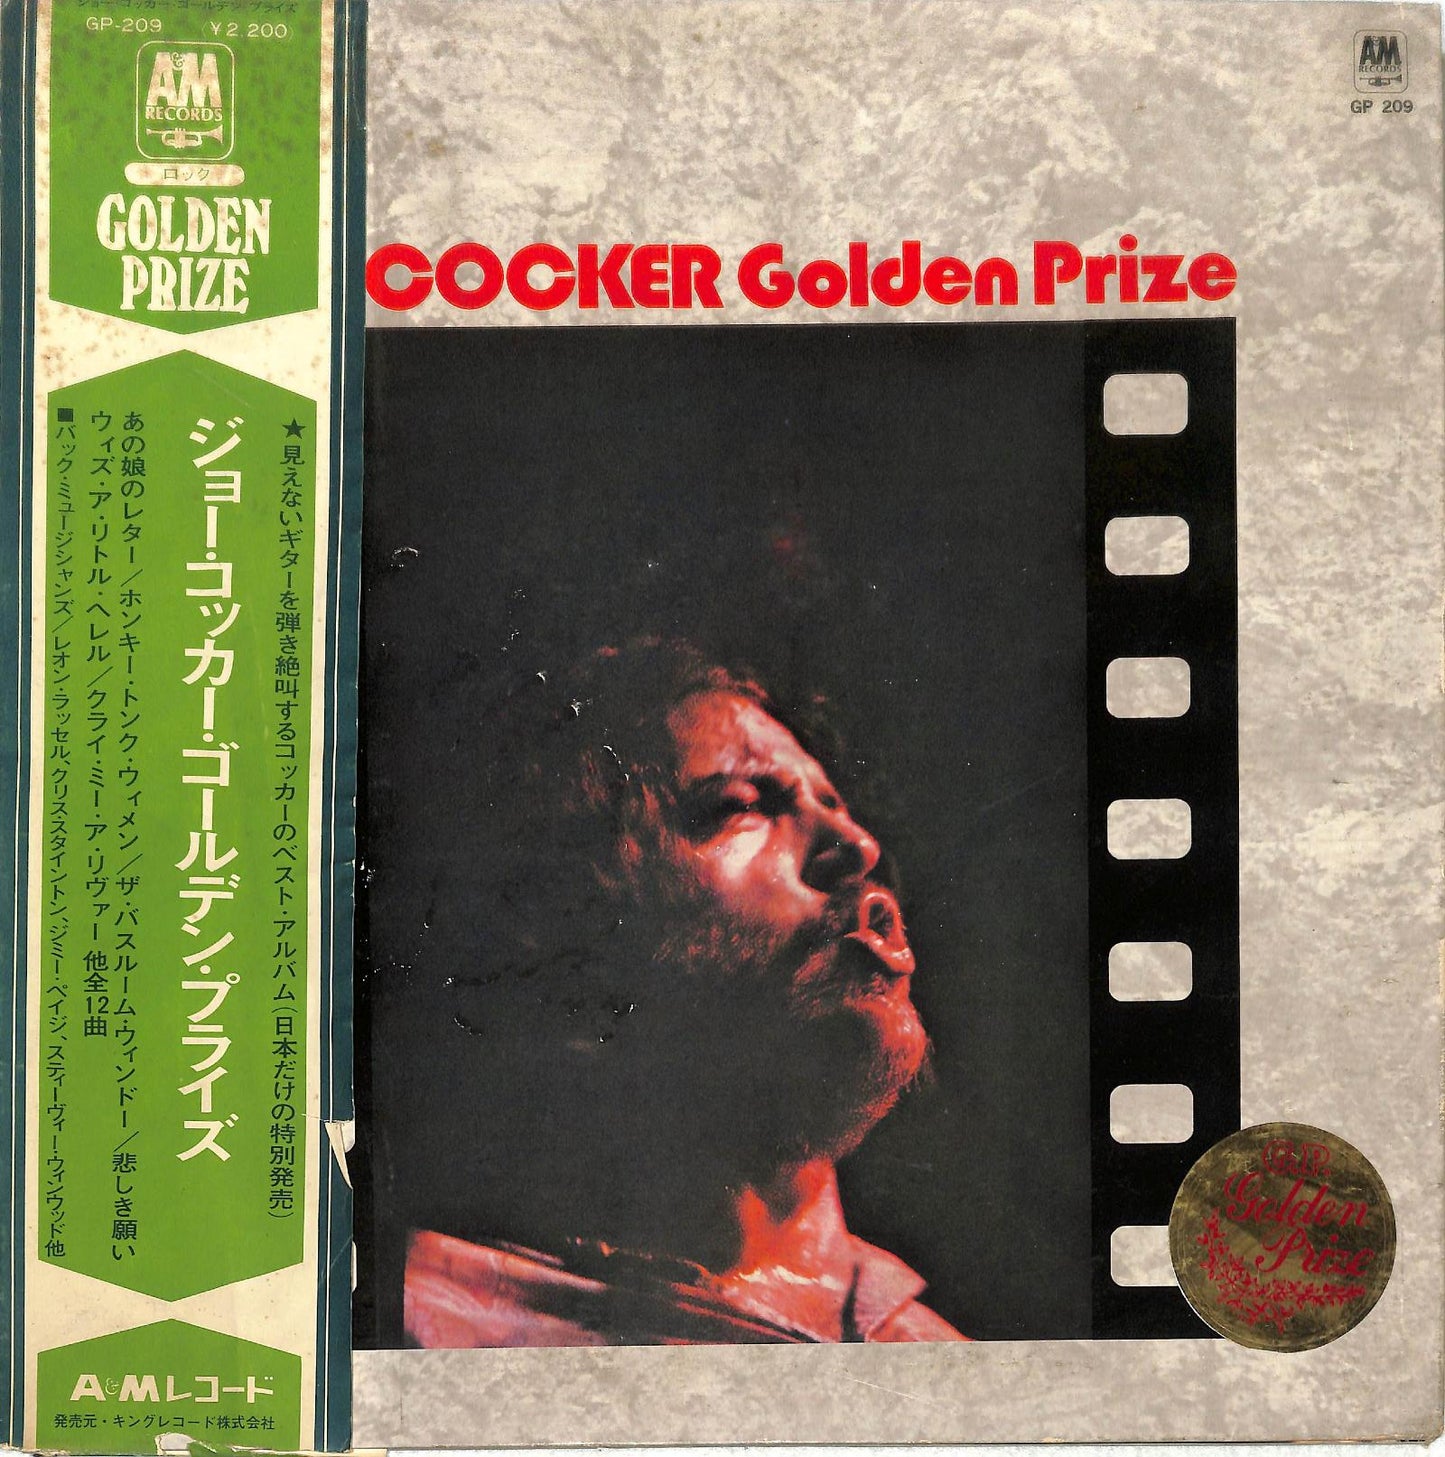 JOE COCKER - Golden Prize